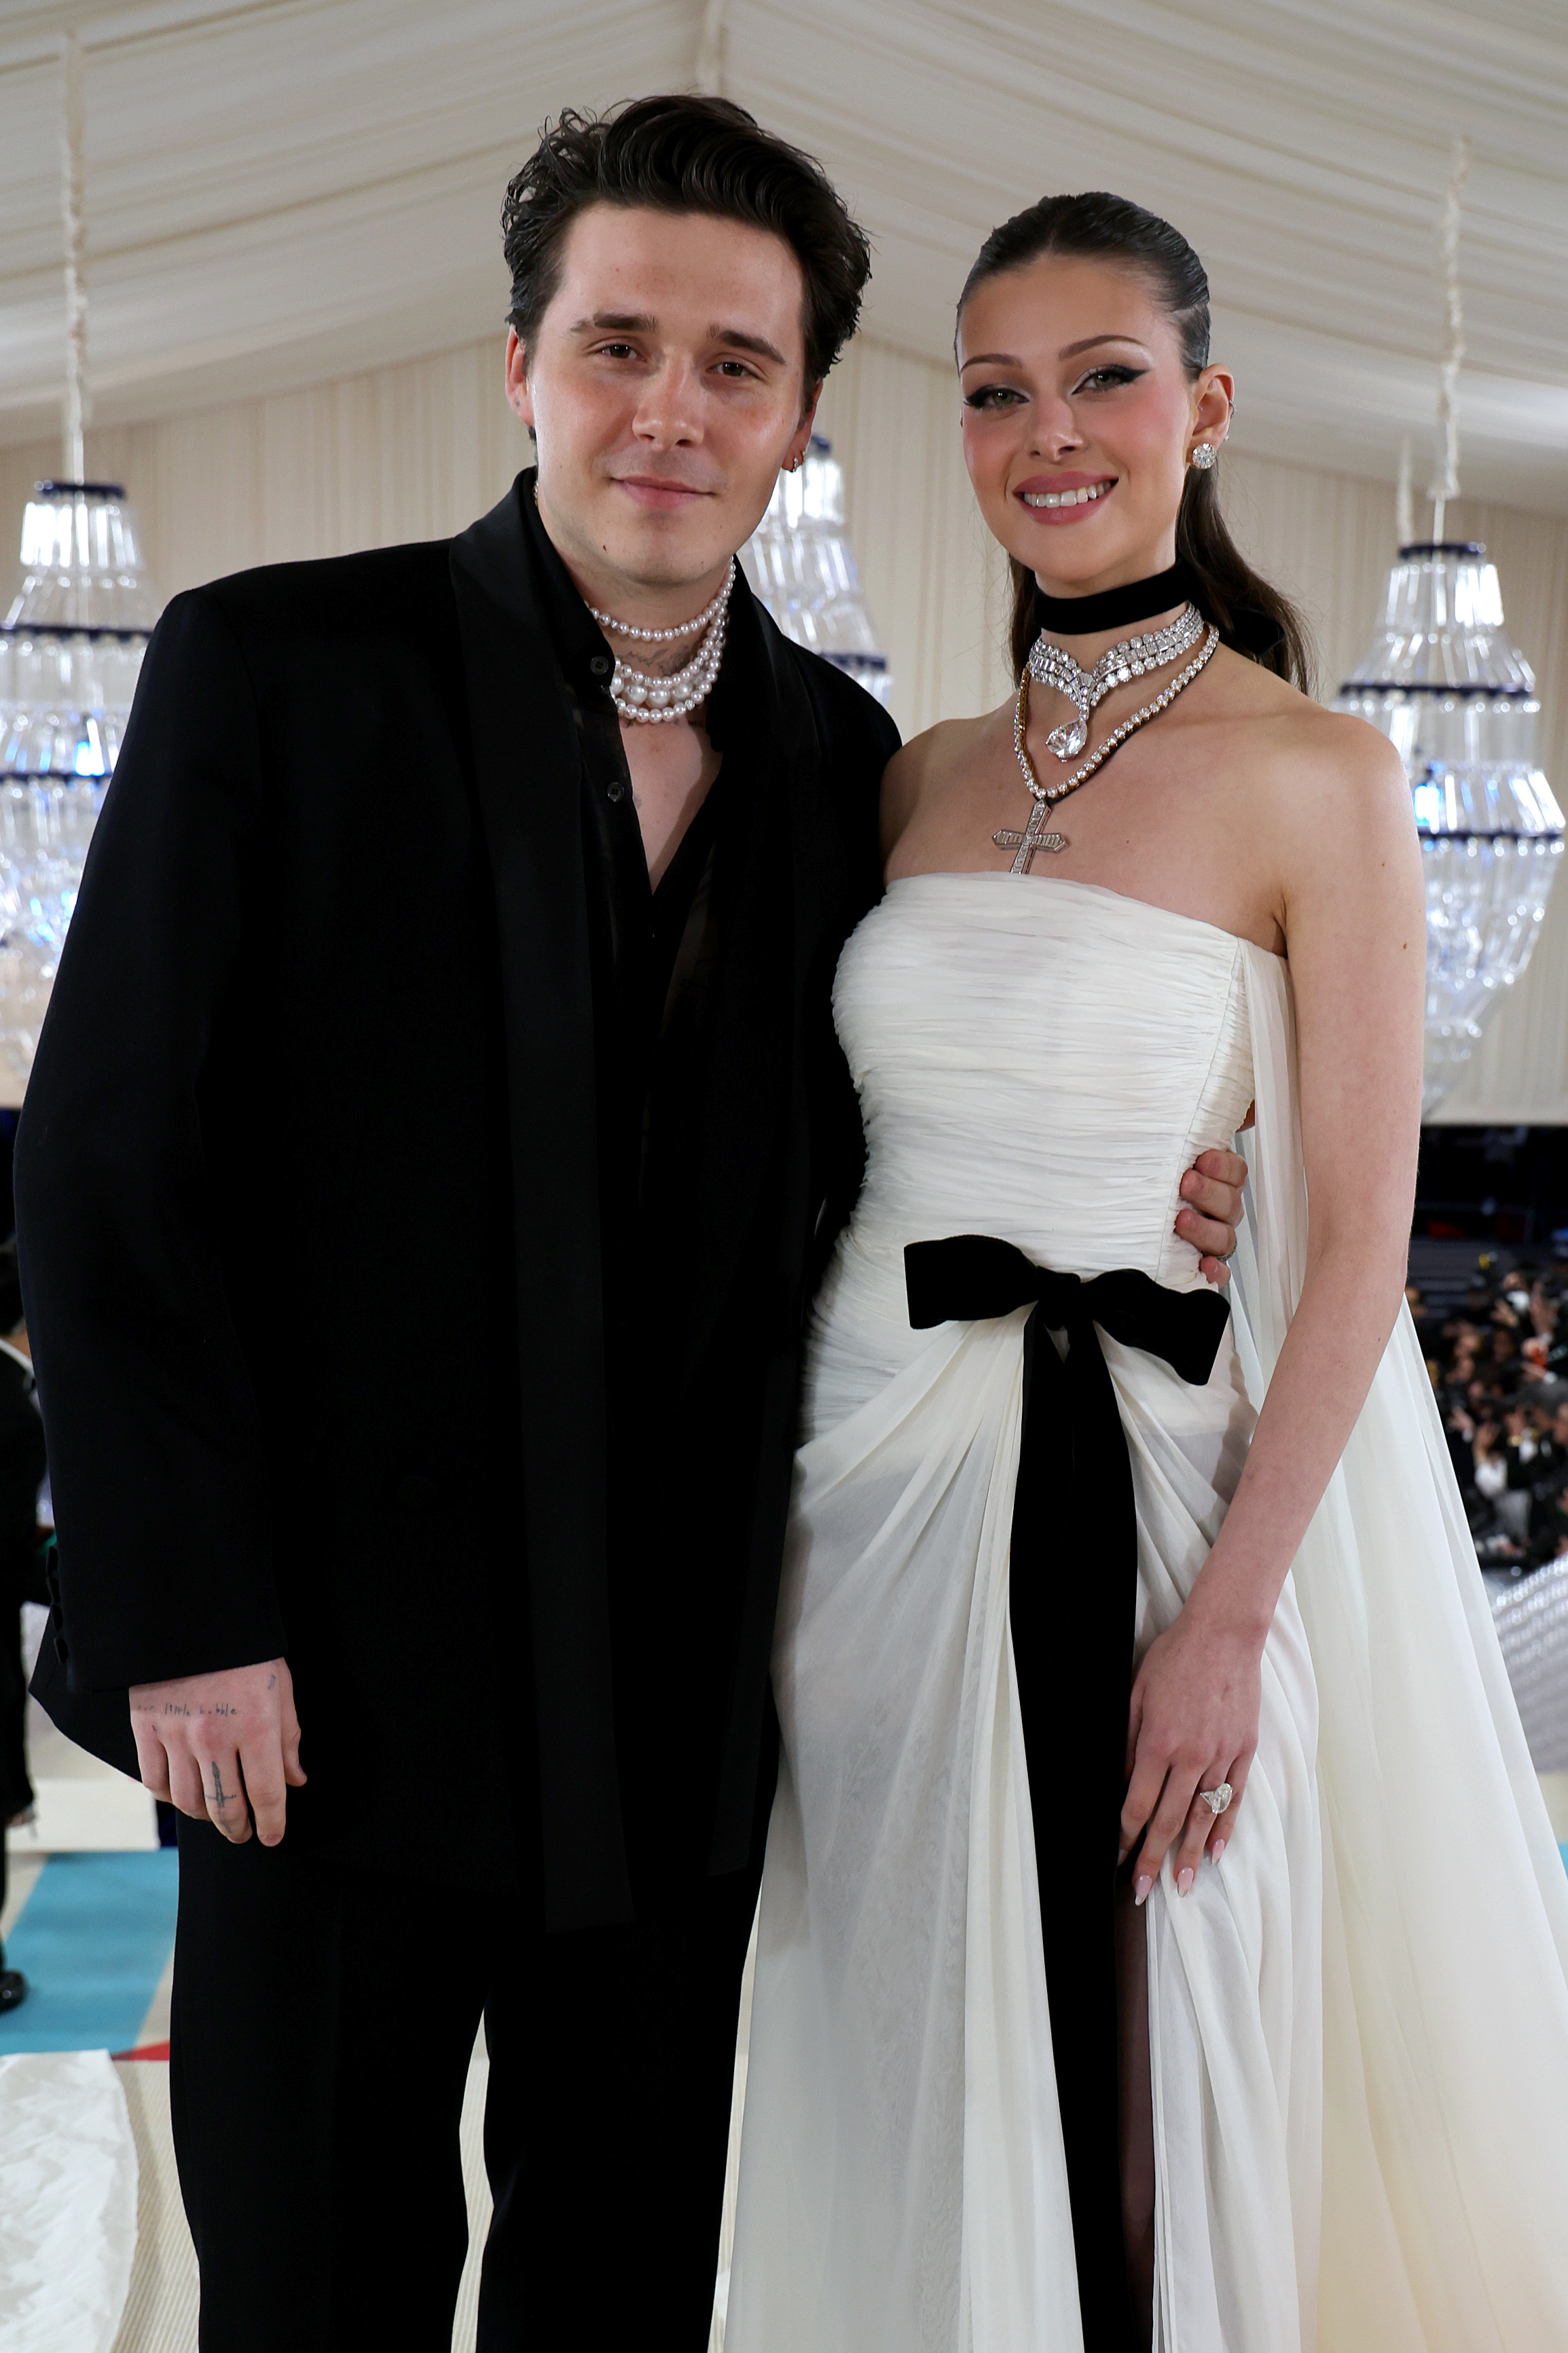 Brooklyn and Nicola Peltz Beckham at a formal event